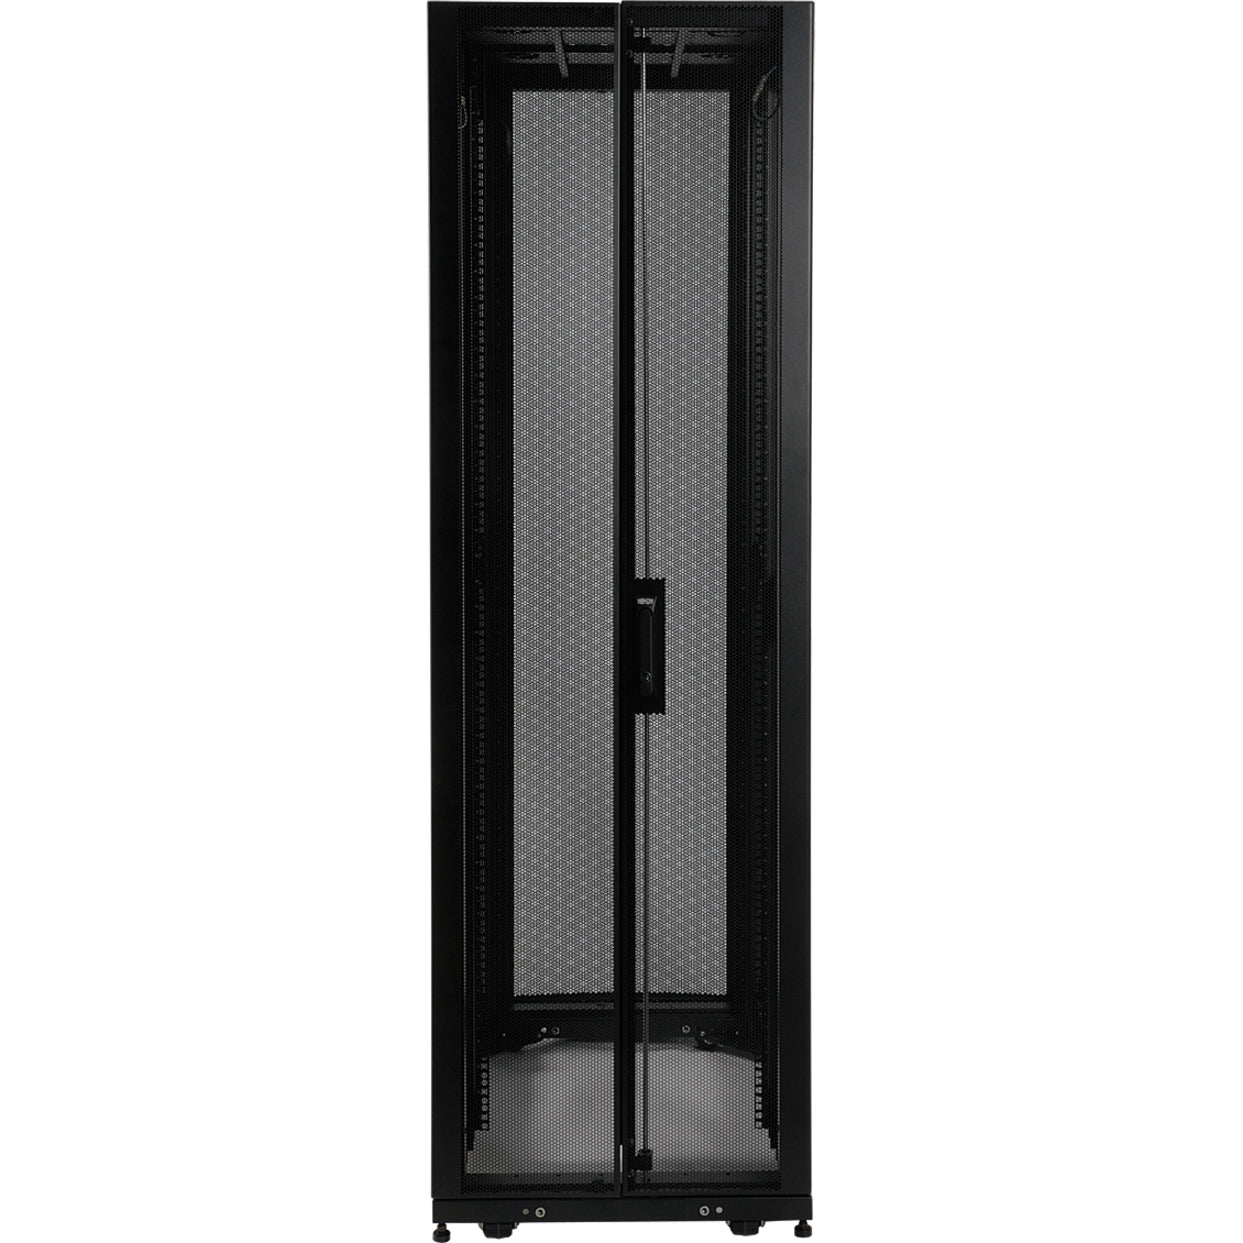 Tripp Lite SR45UBSP1 SmartRack Rack Cabinet, 45U, 5 Year Warranty, Black